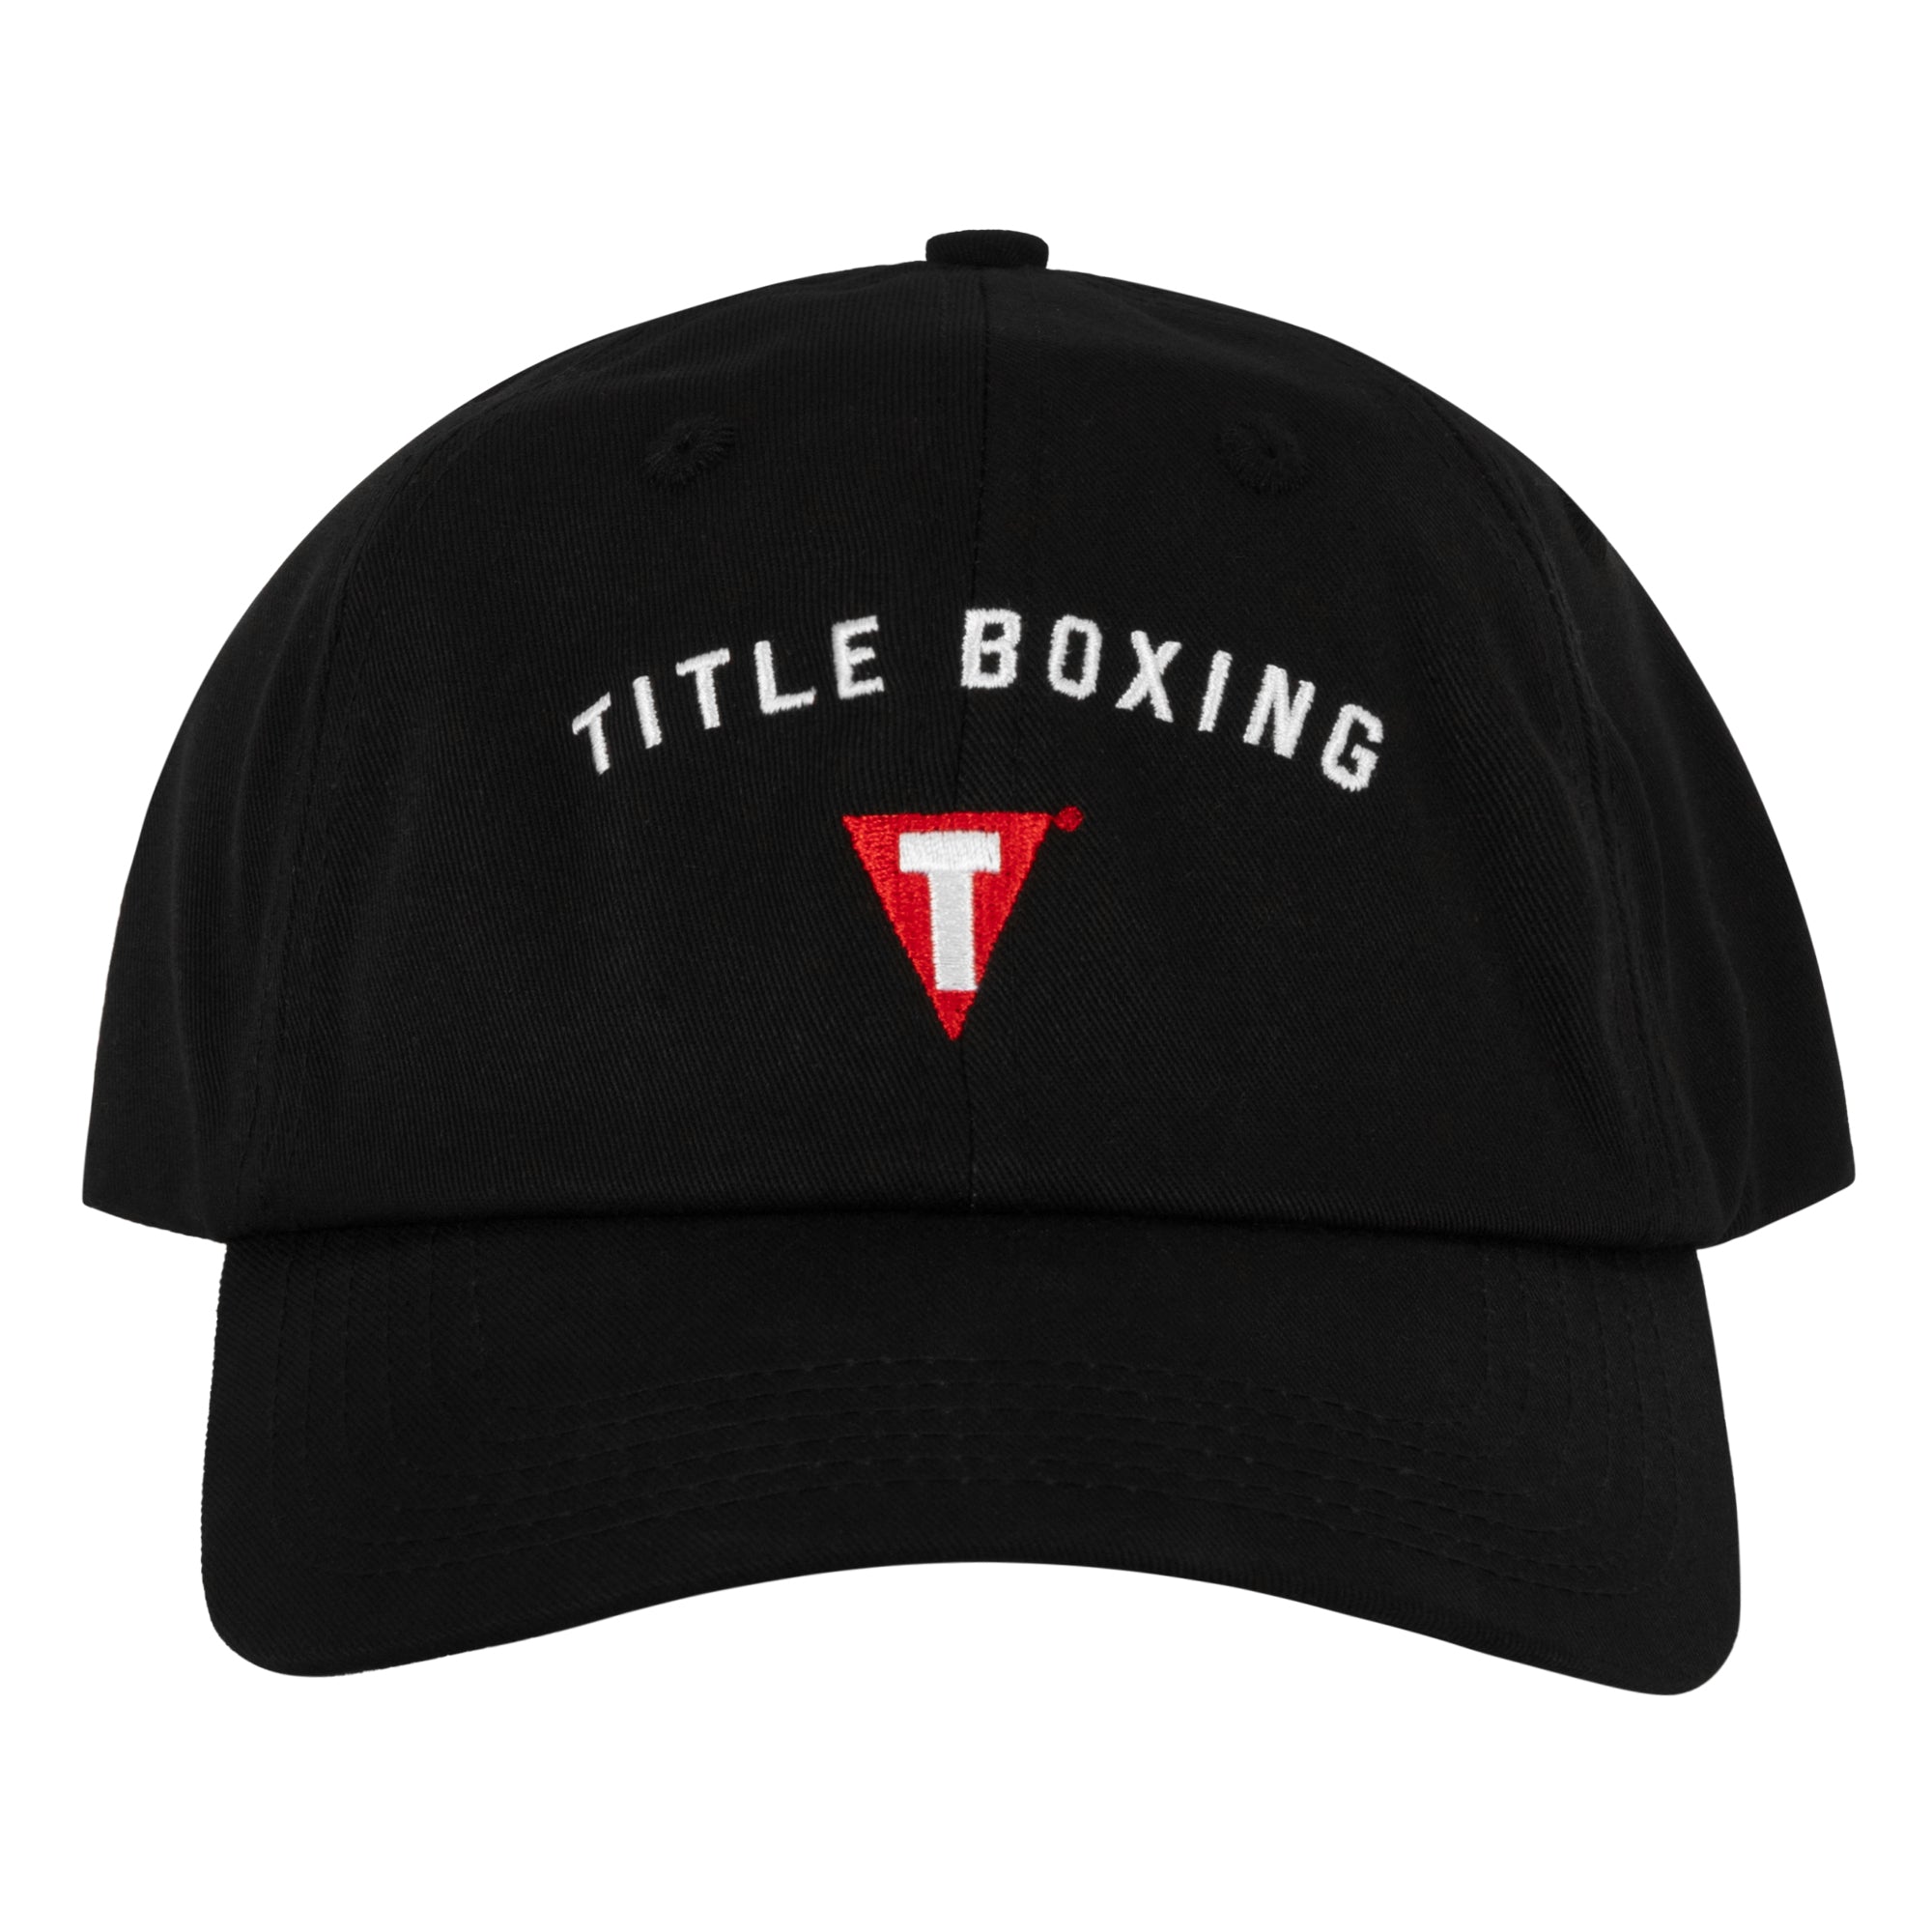 TITLE Boxing Dad Hat Adjustable Cap